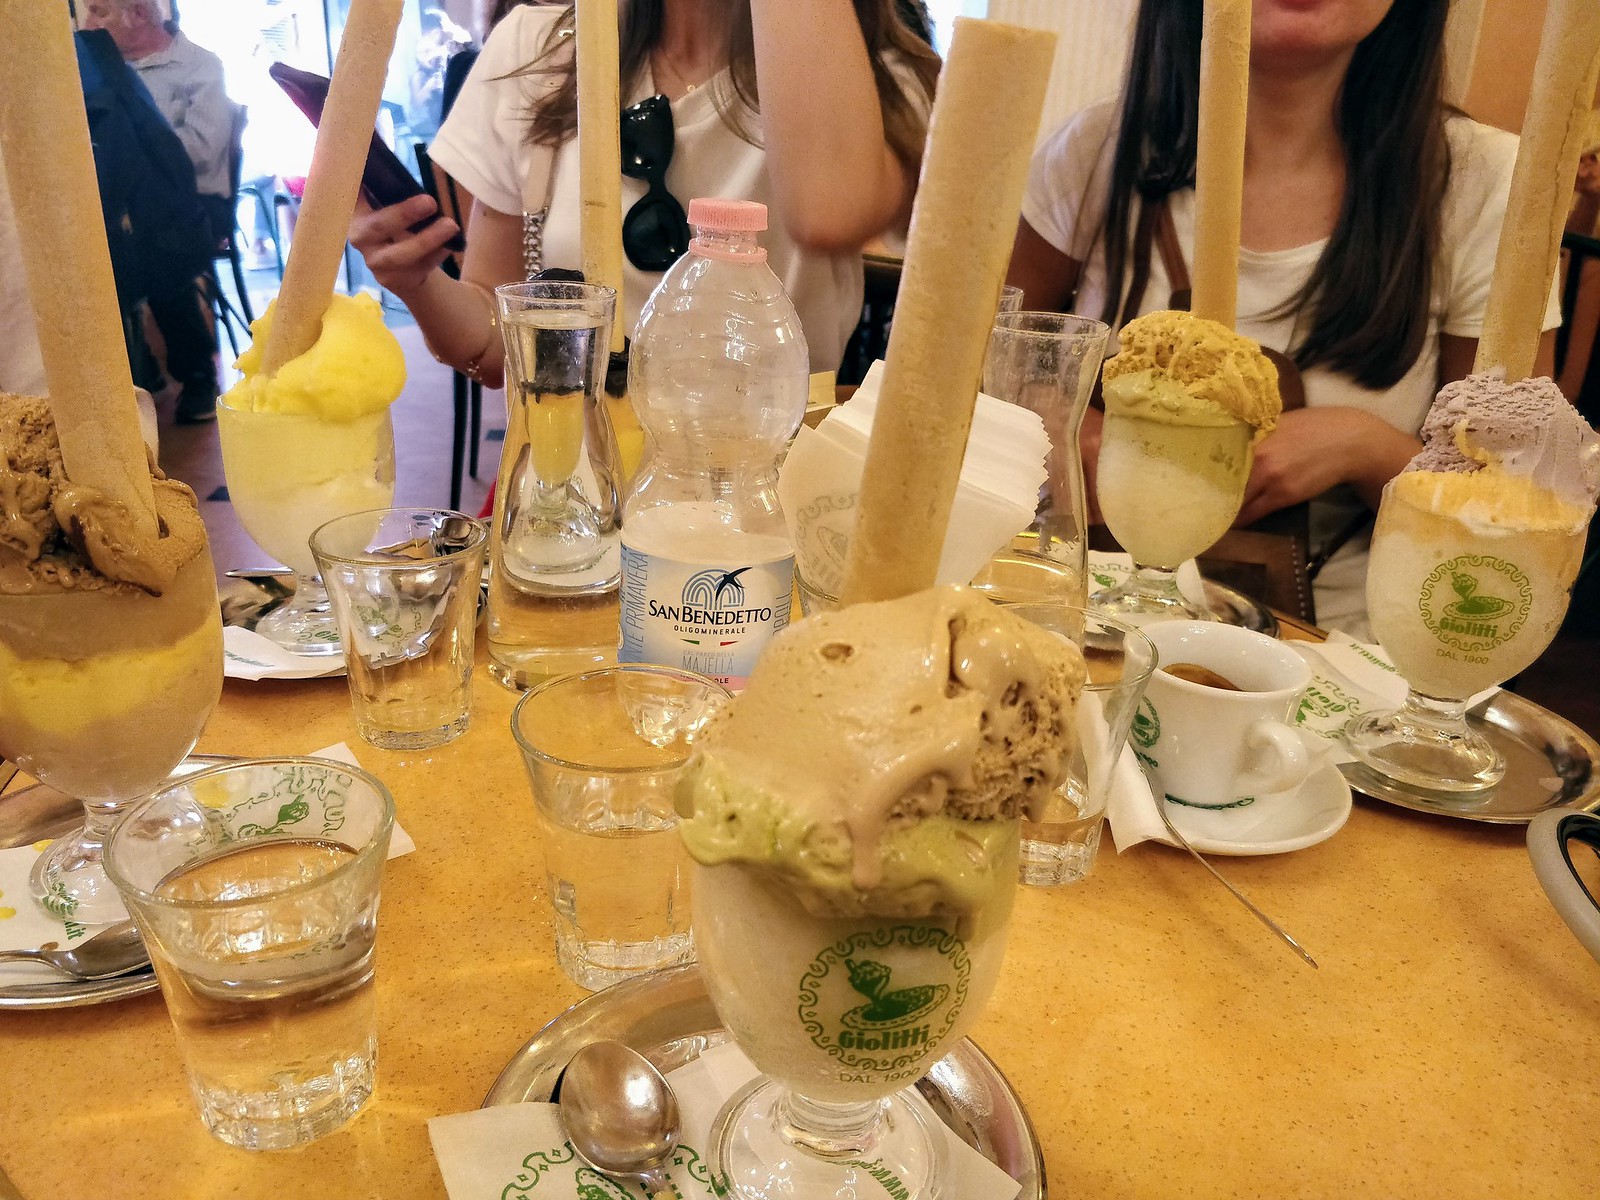 Ice cream at Giolitti